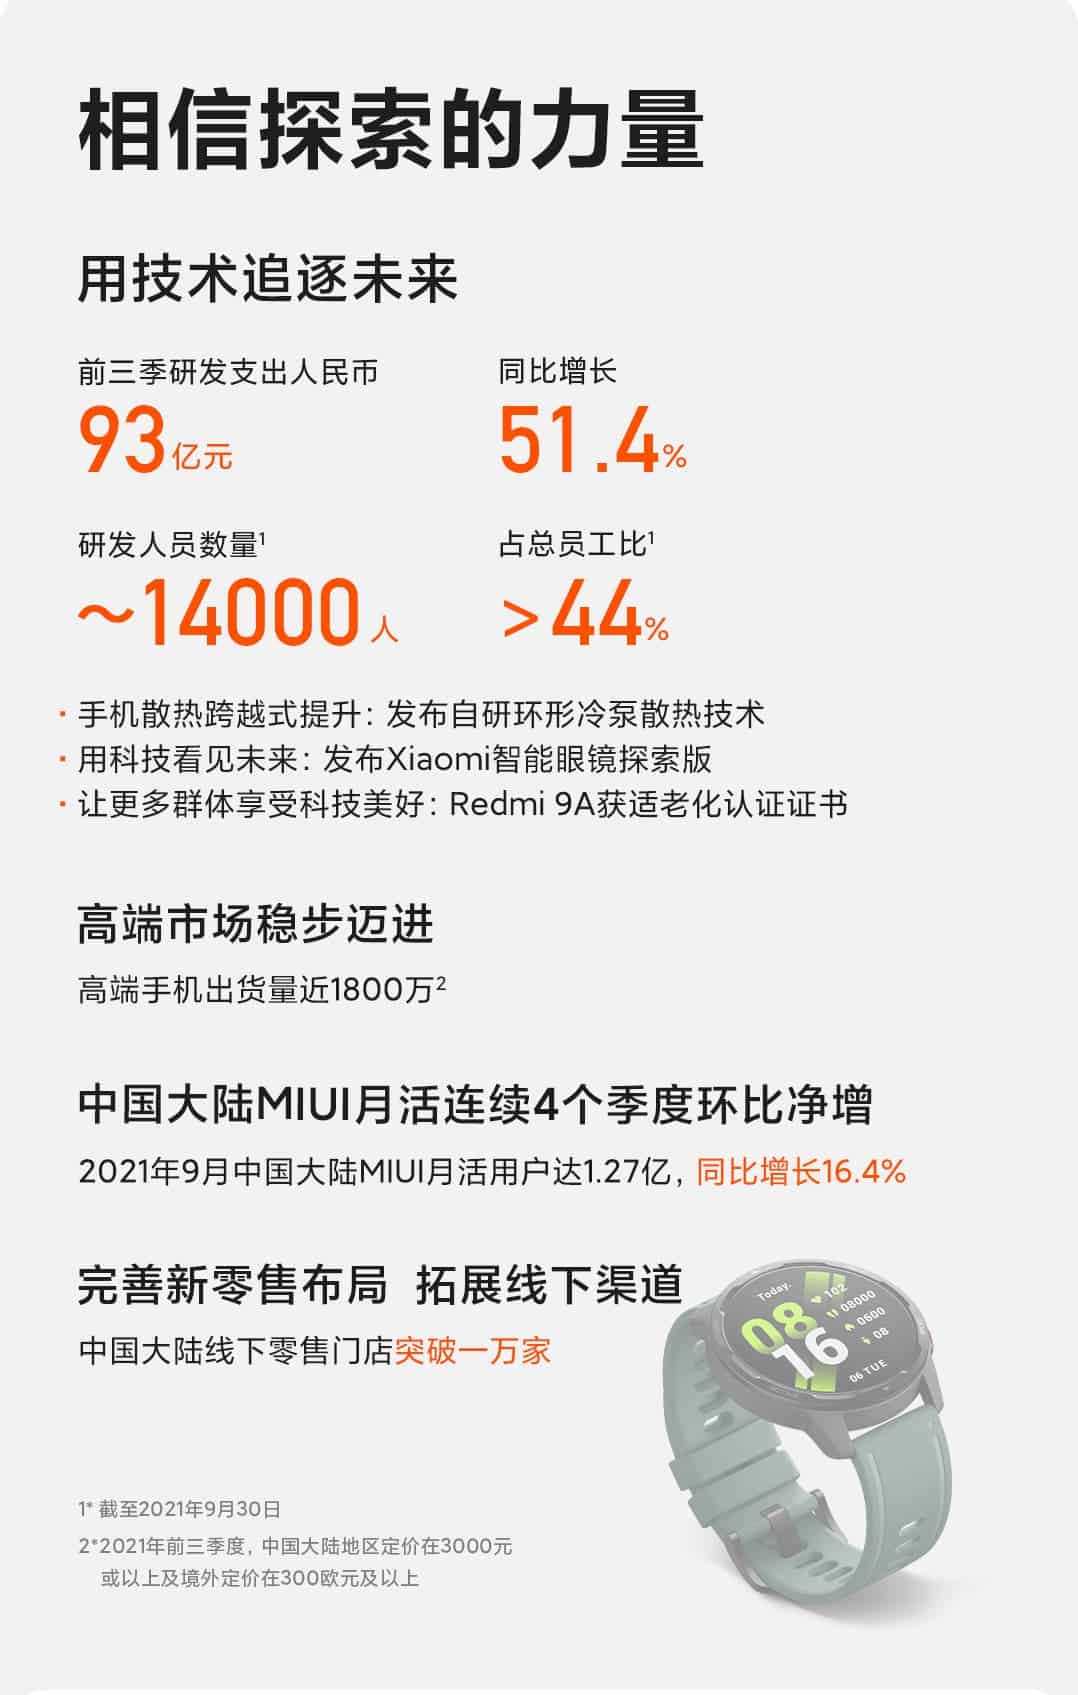 Xiaomi group